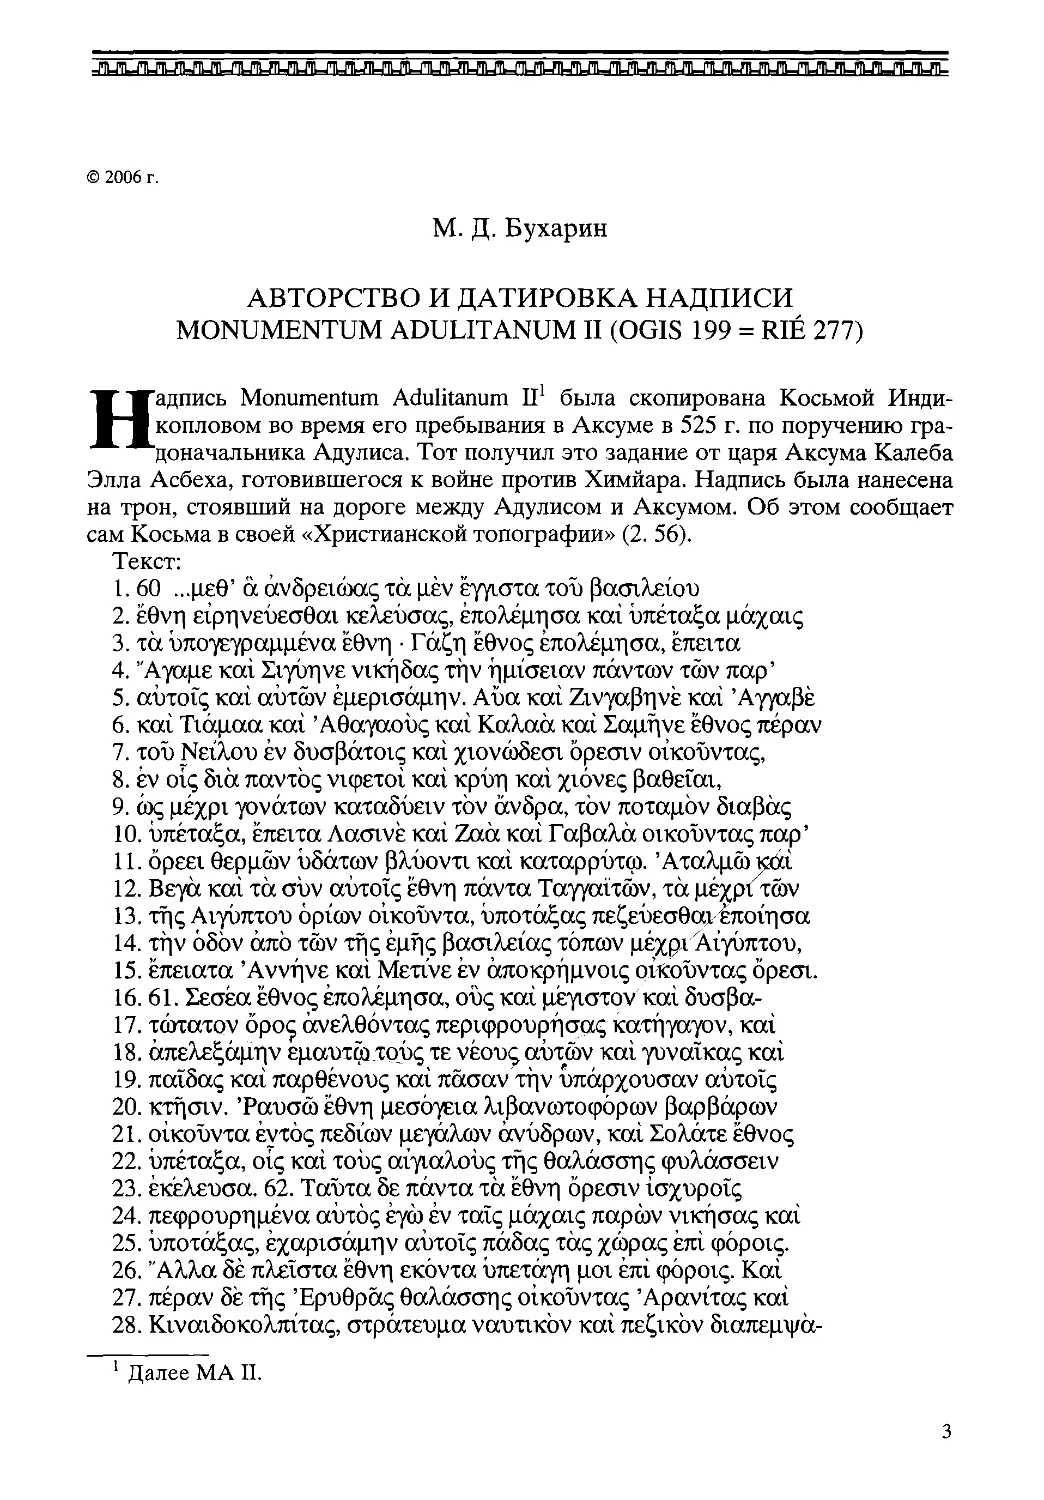 ﻿Авторство и датировка надписи Monumentum adulitanum II øOGIS 199=RIE 277ù. М. Д. Бухари